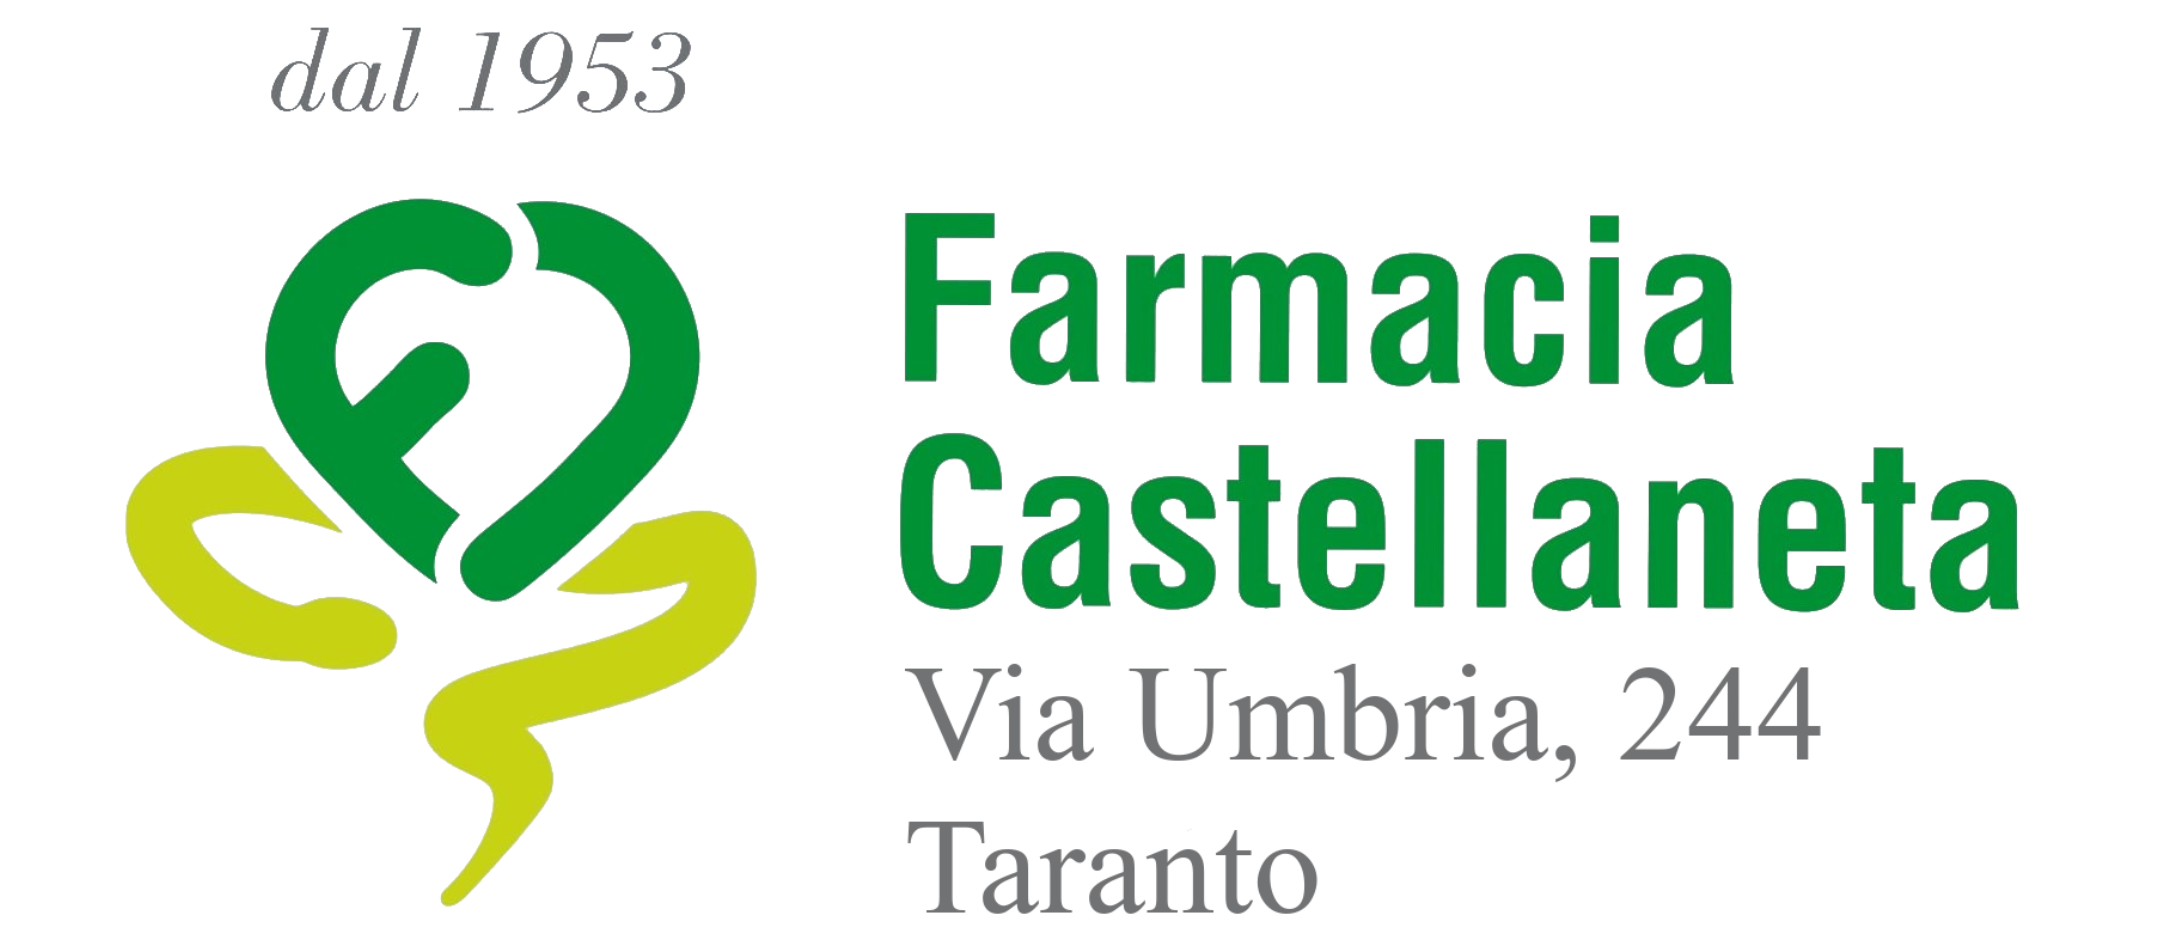 Farmacia Castellaneta